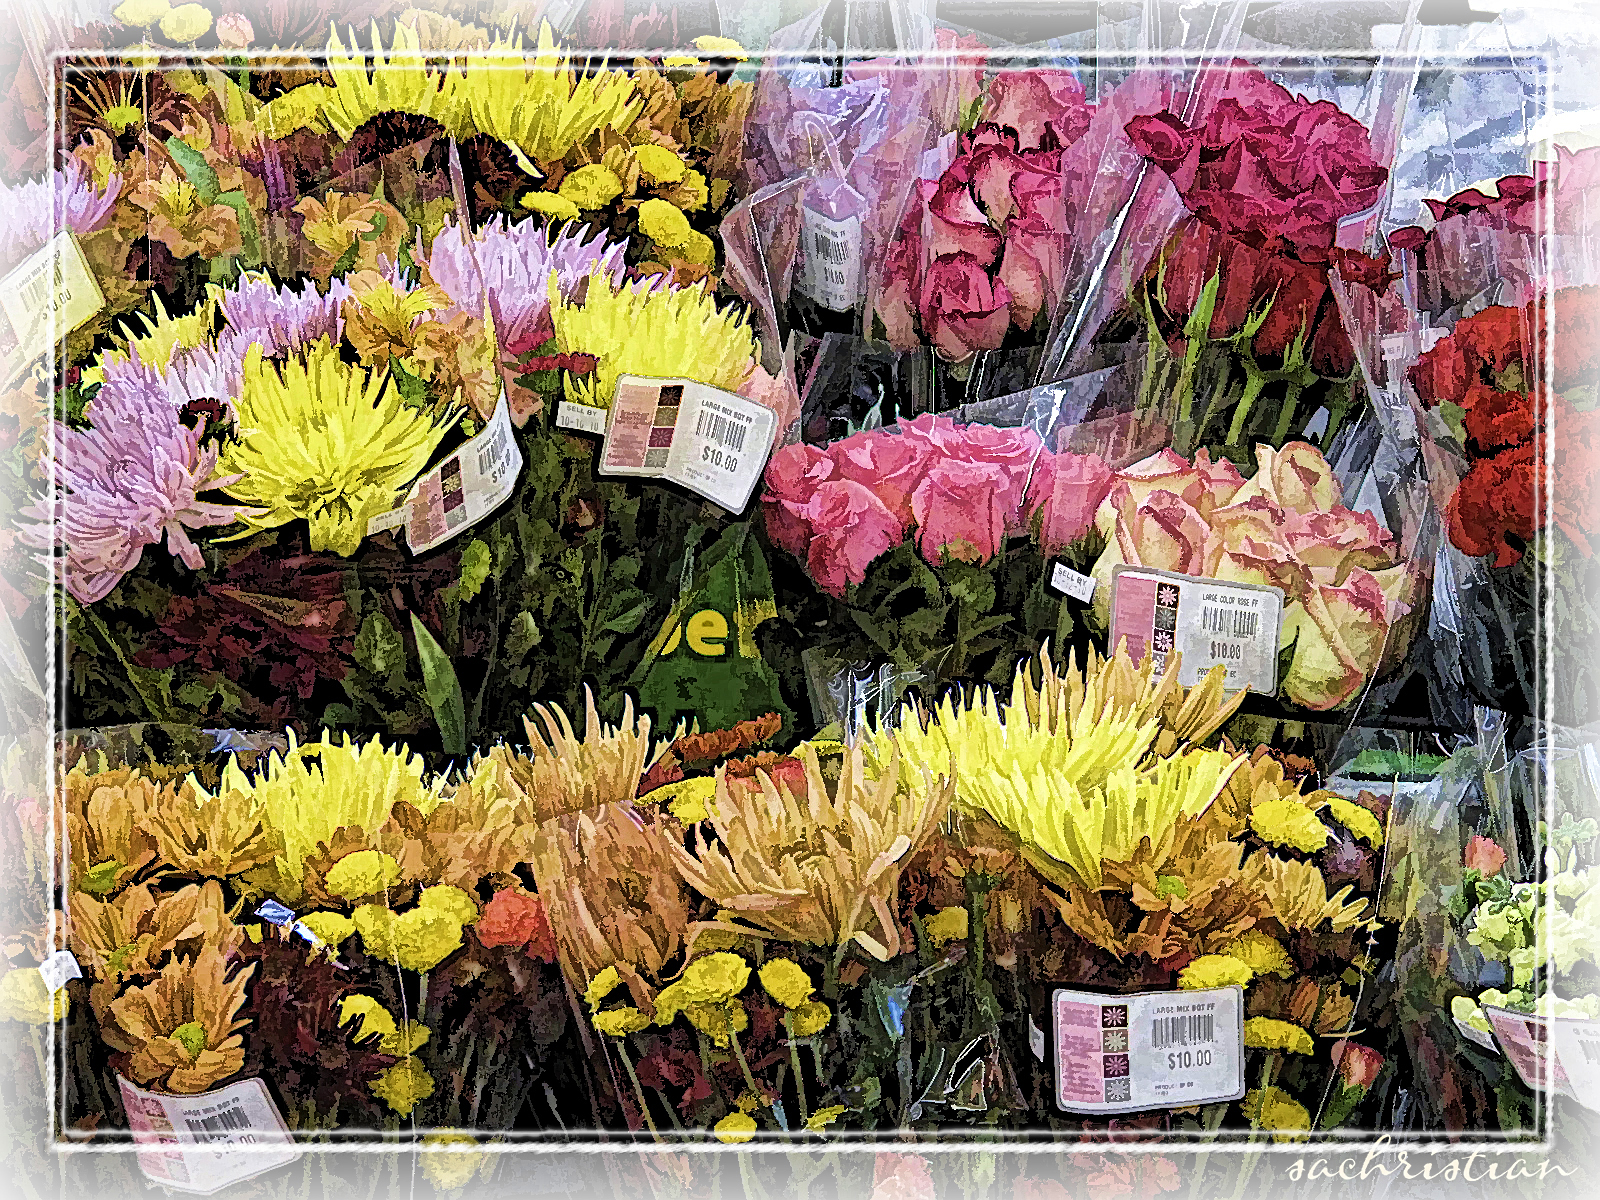 Flowers for Sale | Sannechristian's Blog